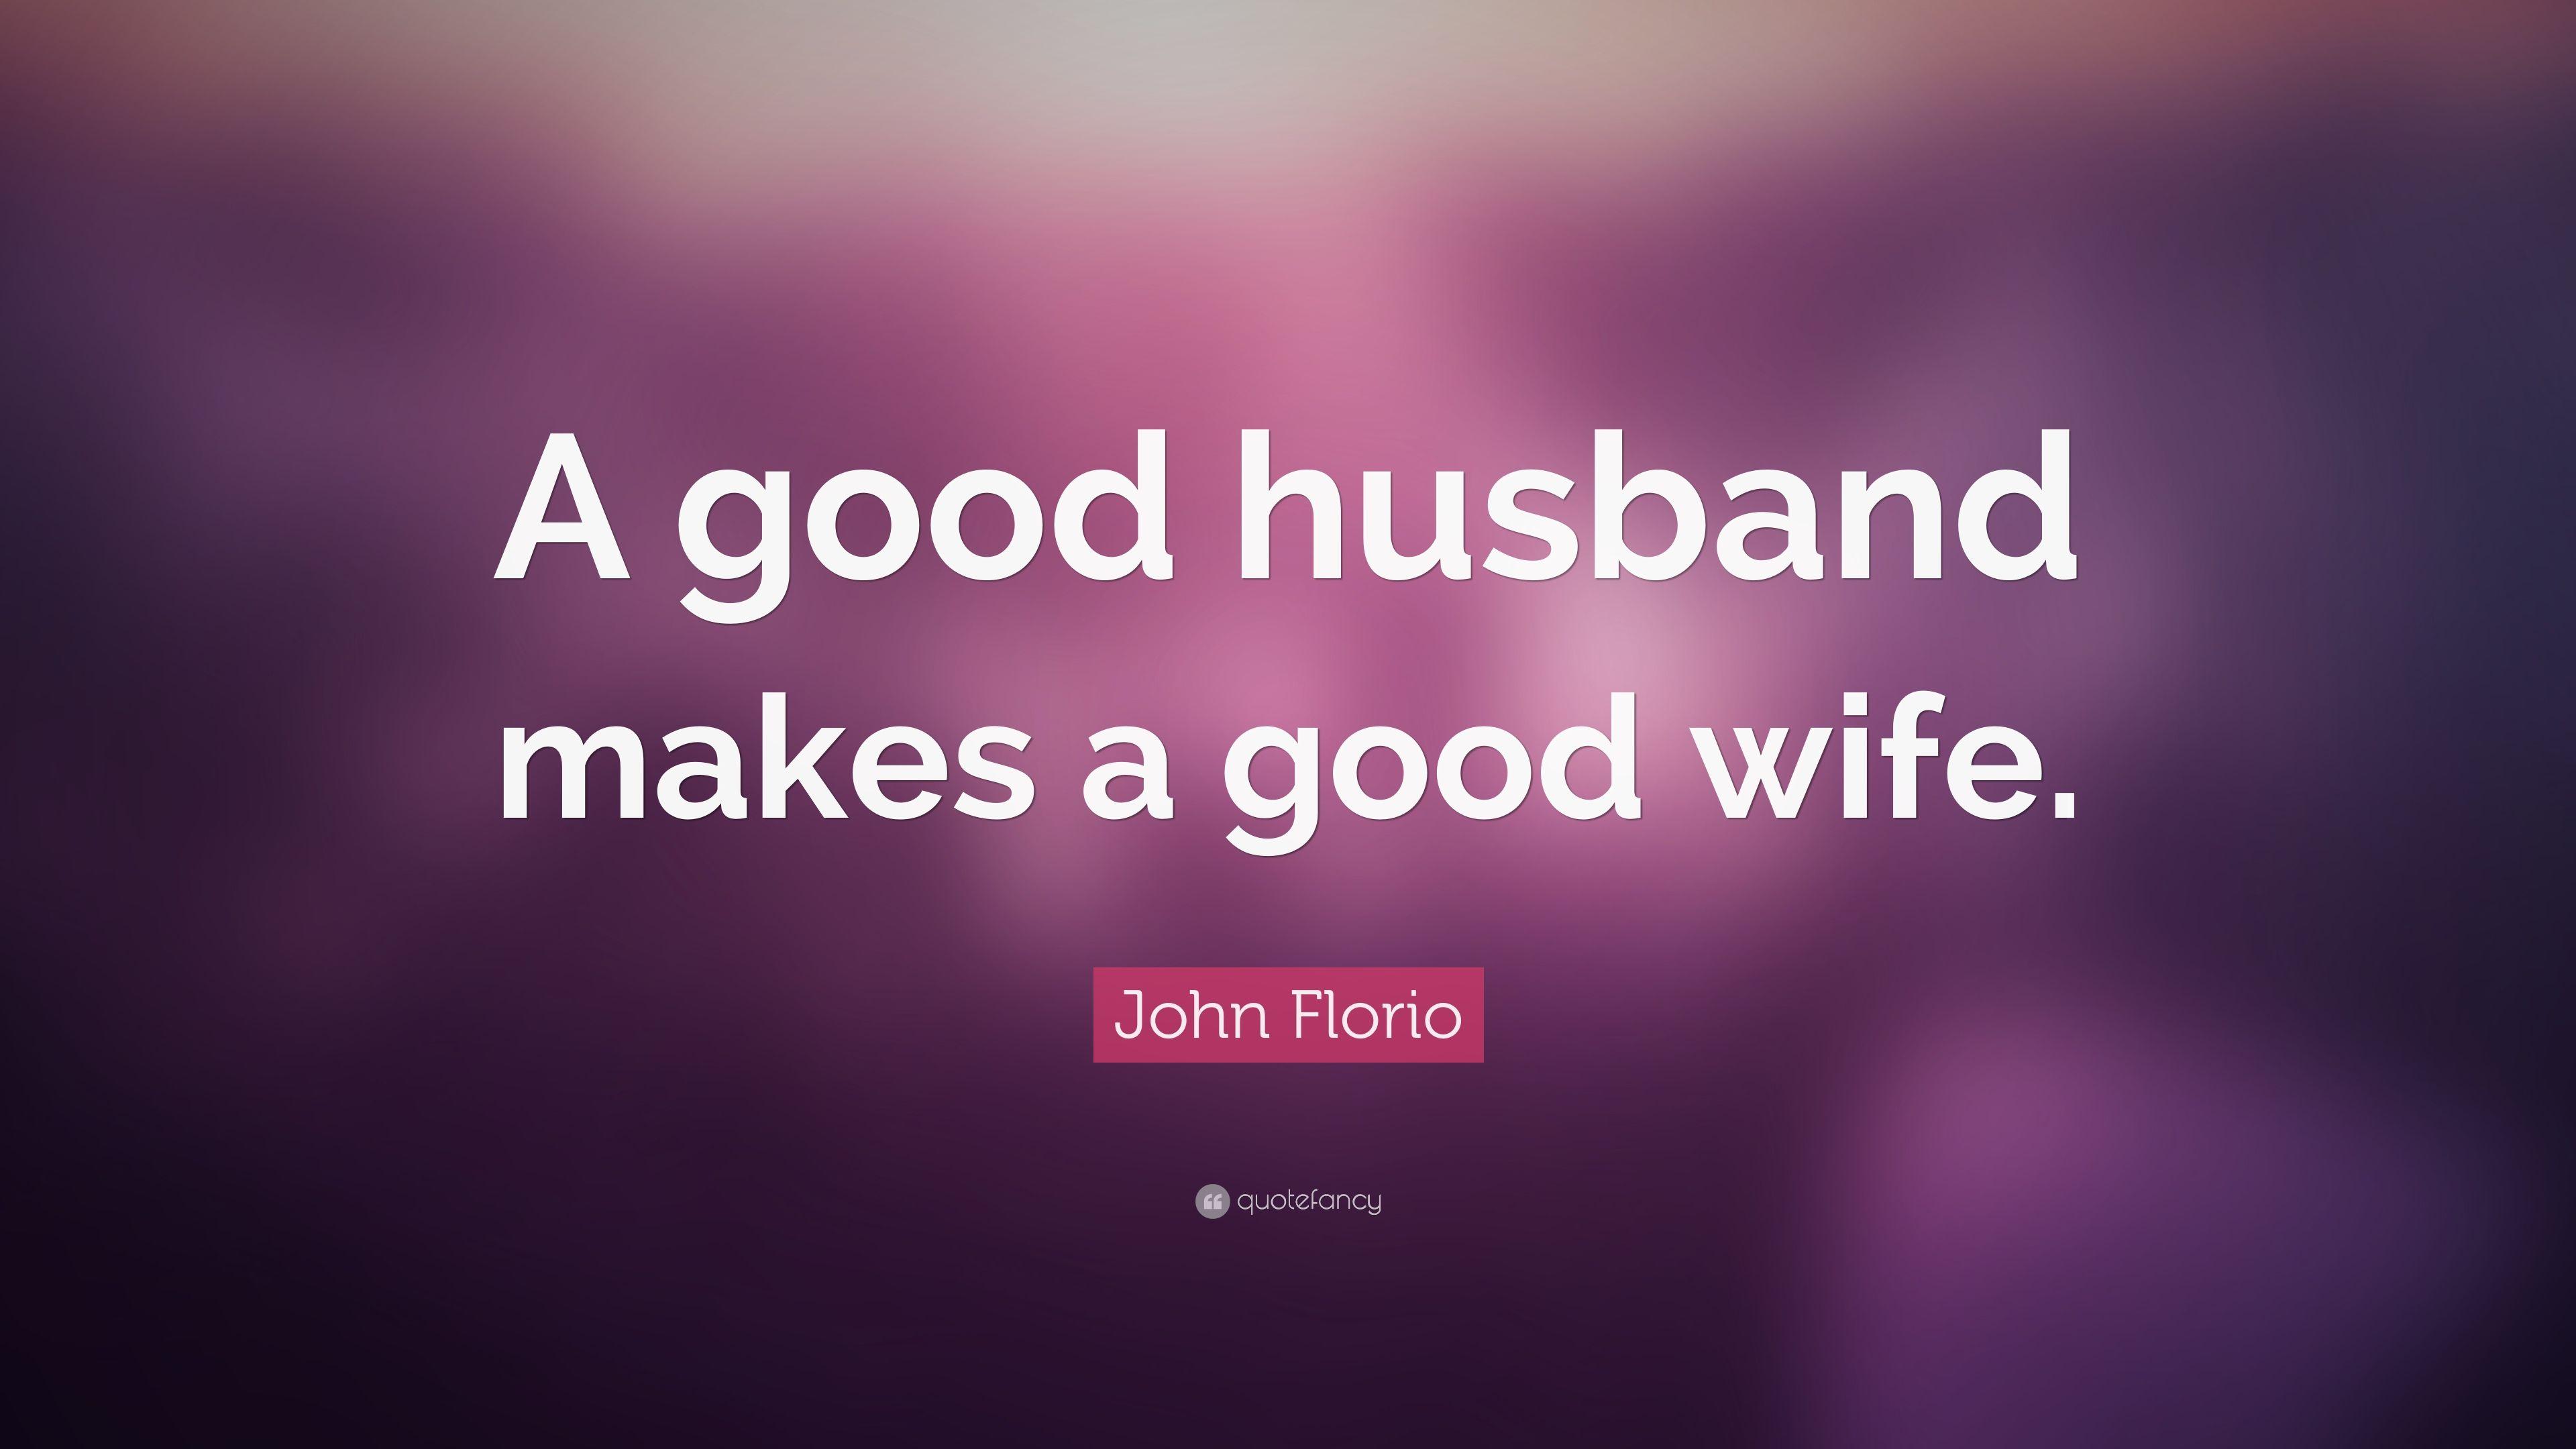 John Florio Quote: “A good husband makes a good wife.” 9 wallpaper